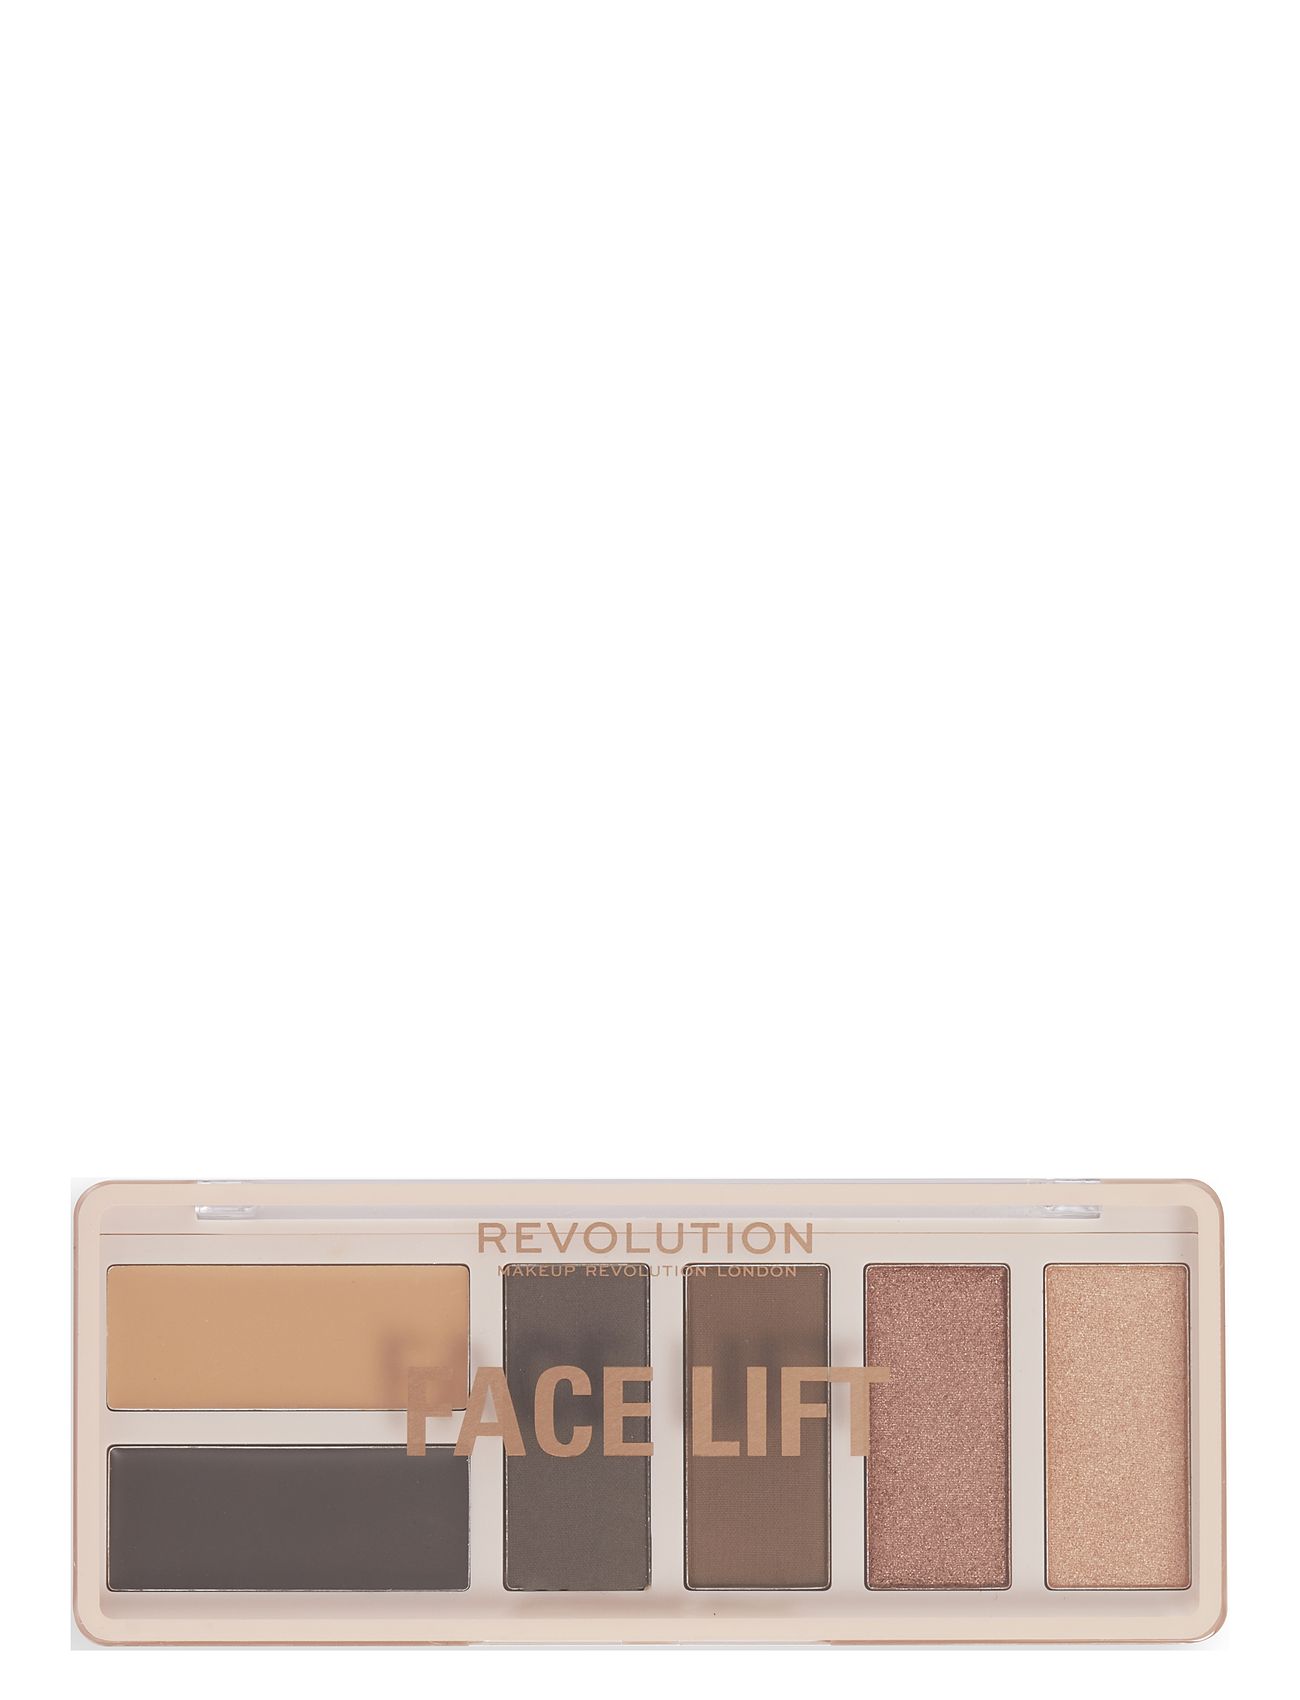 Revolution Face Lift Palette Tan To Deep Contouring Smink Makeup Revolution